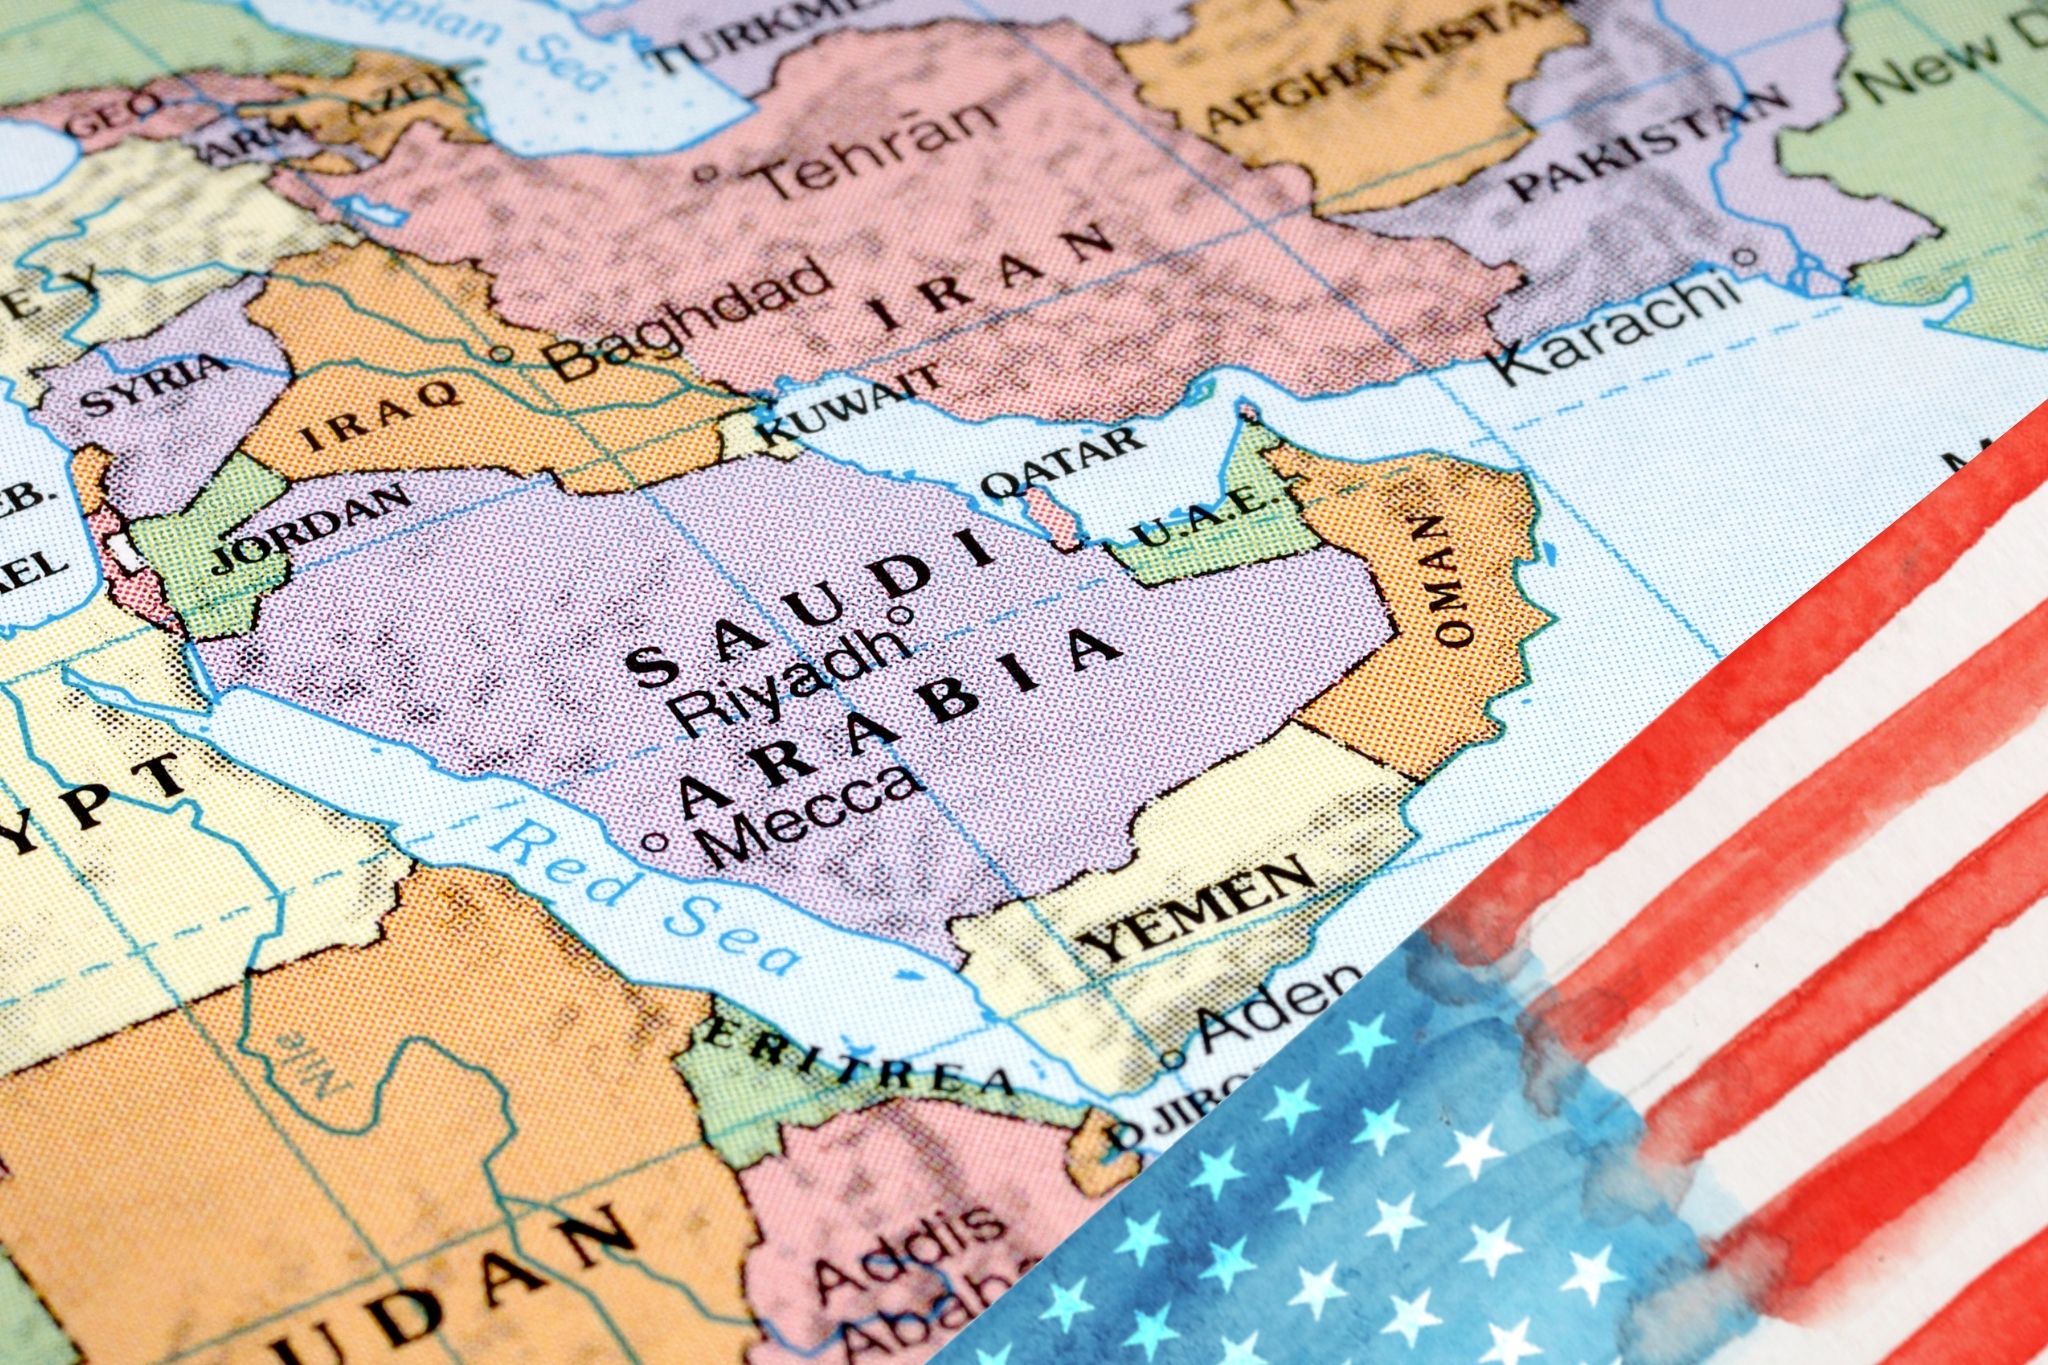 USA flag alongside map of Middle East